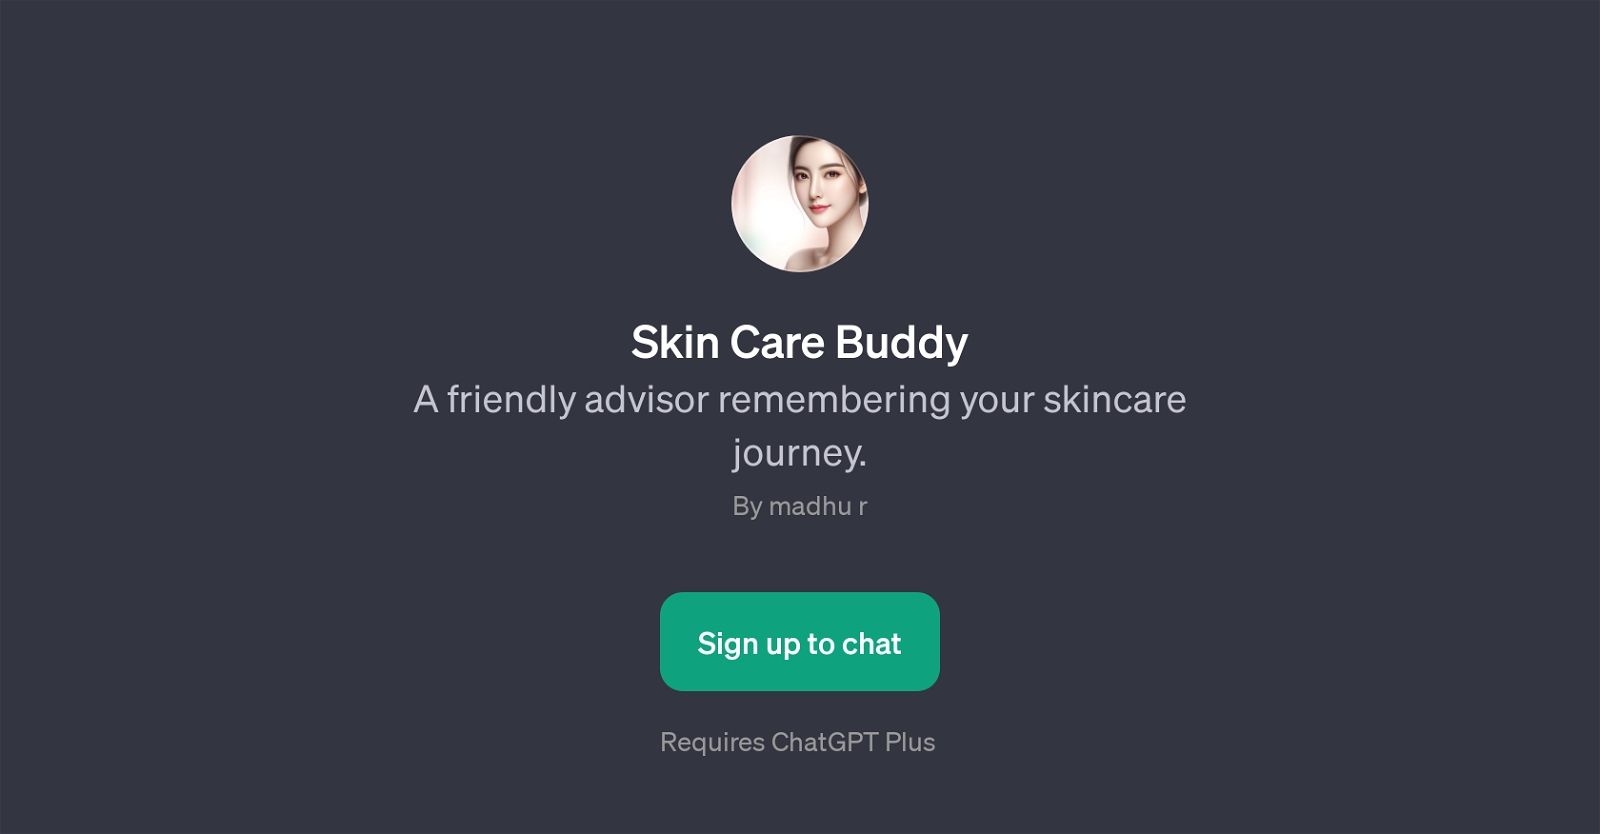 Skin Care Buddy website